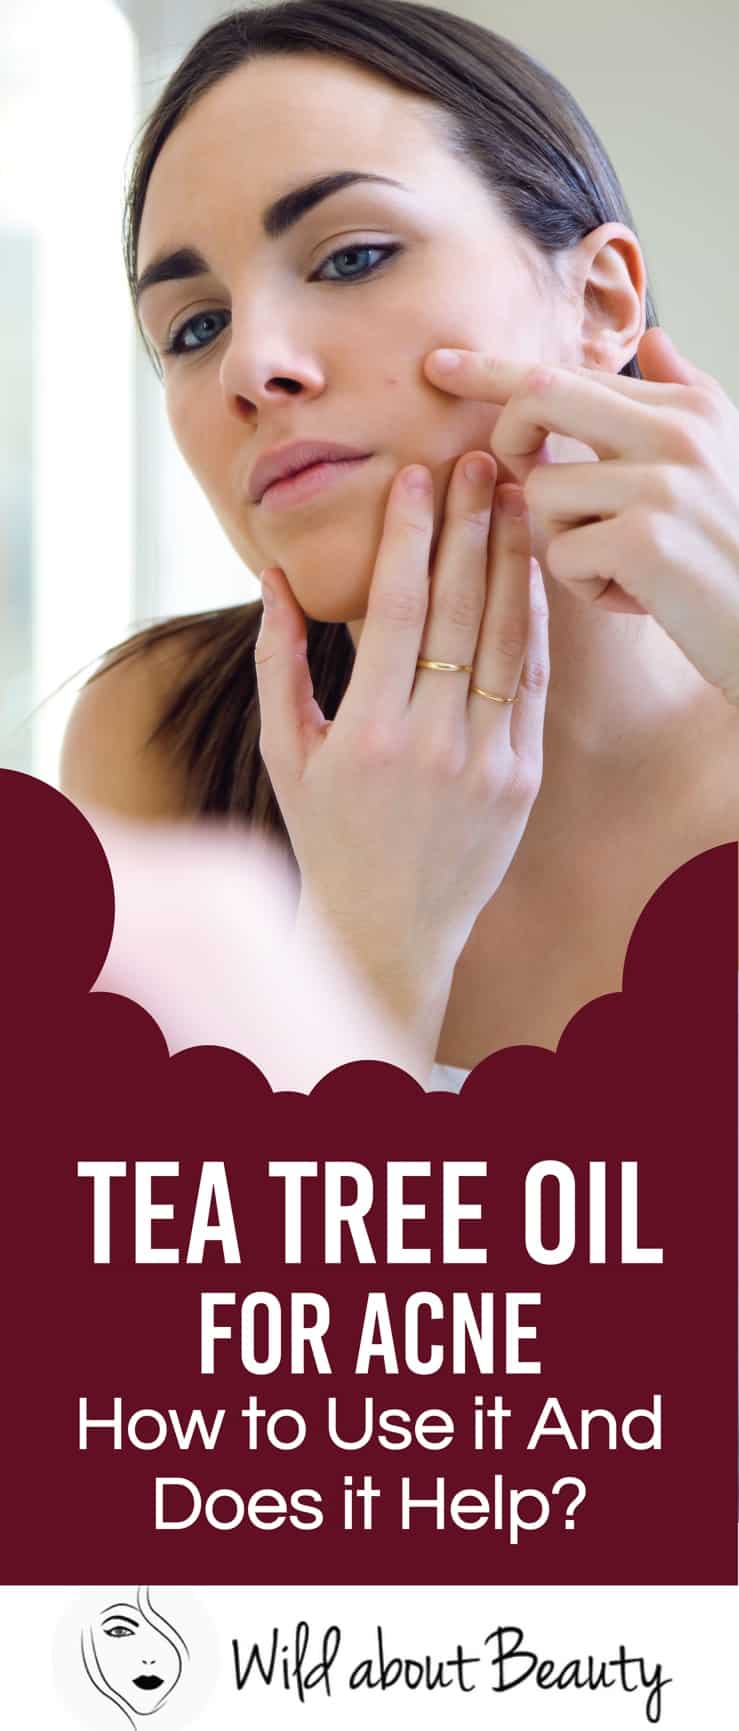 Tea tree oil for acne